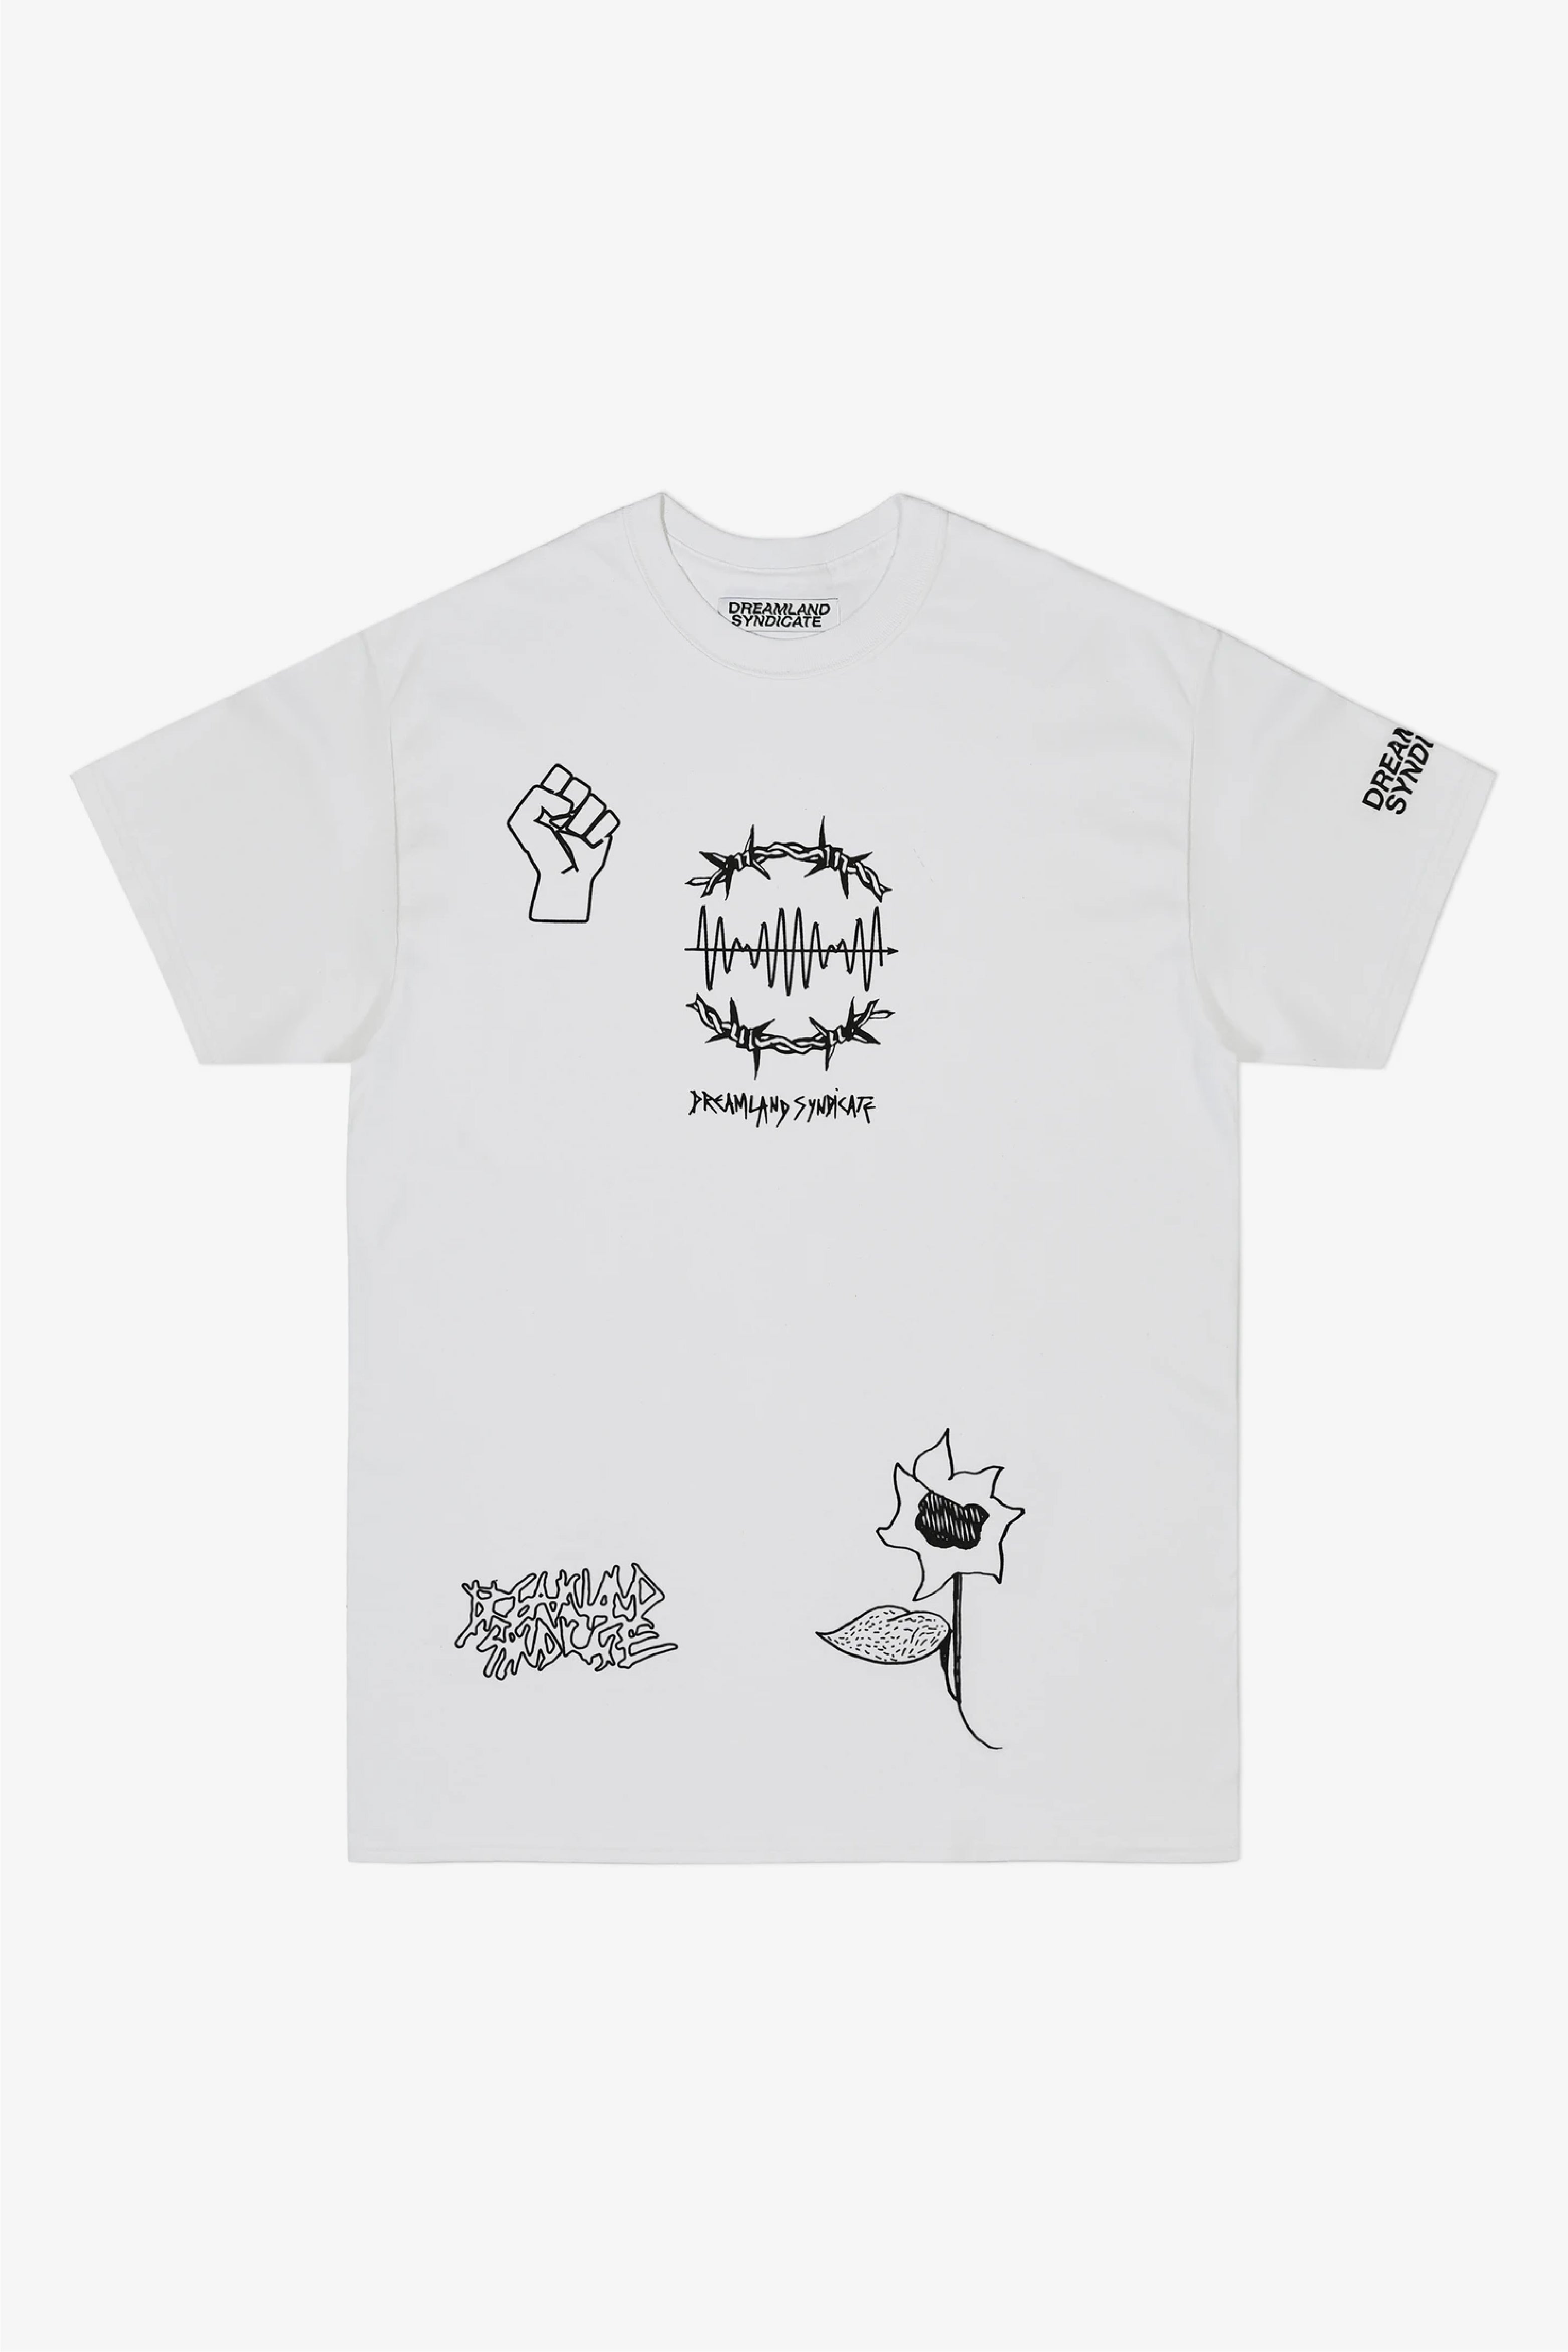 Selectshop FRAME - DREAMLAND SYNDICATE AAE Tee T-Shirts Dubai